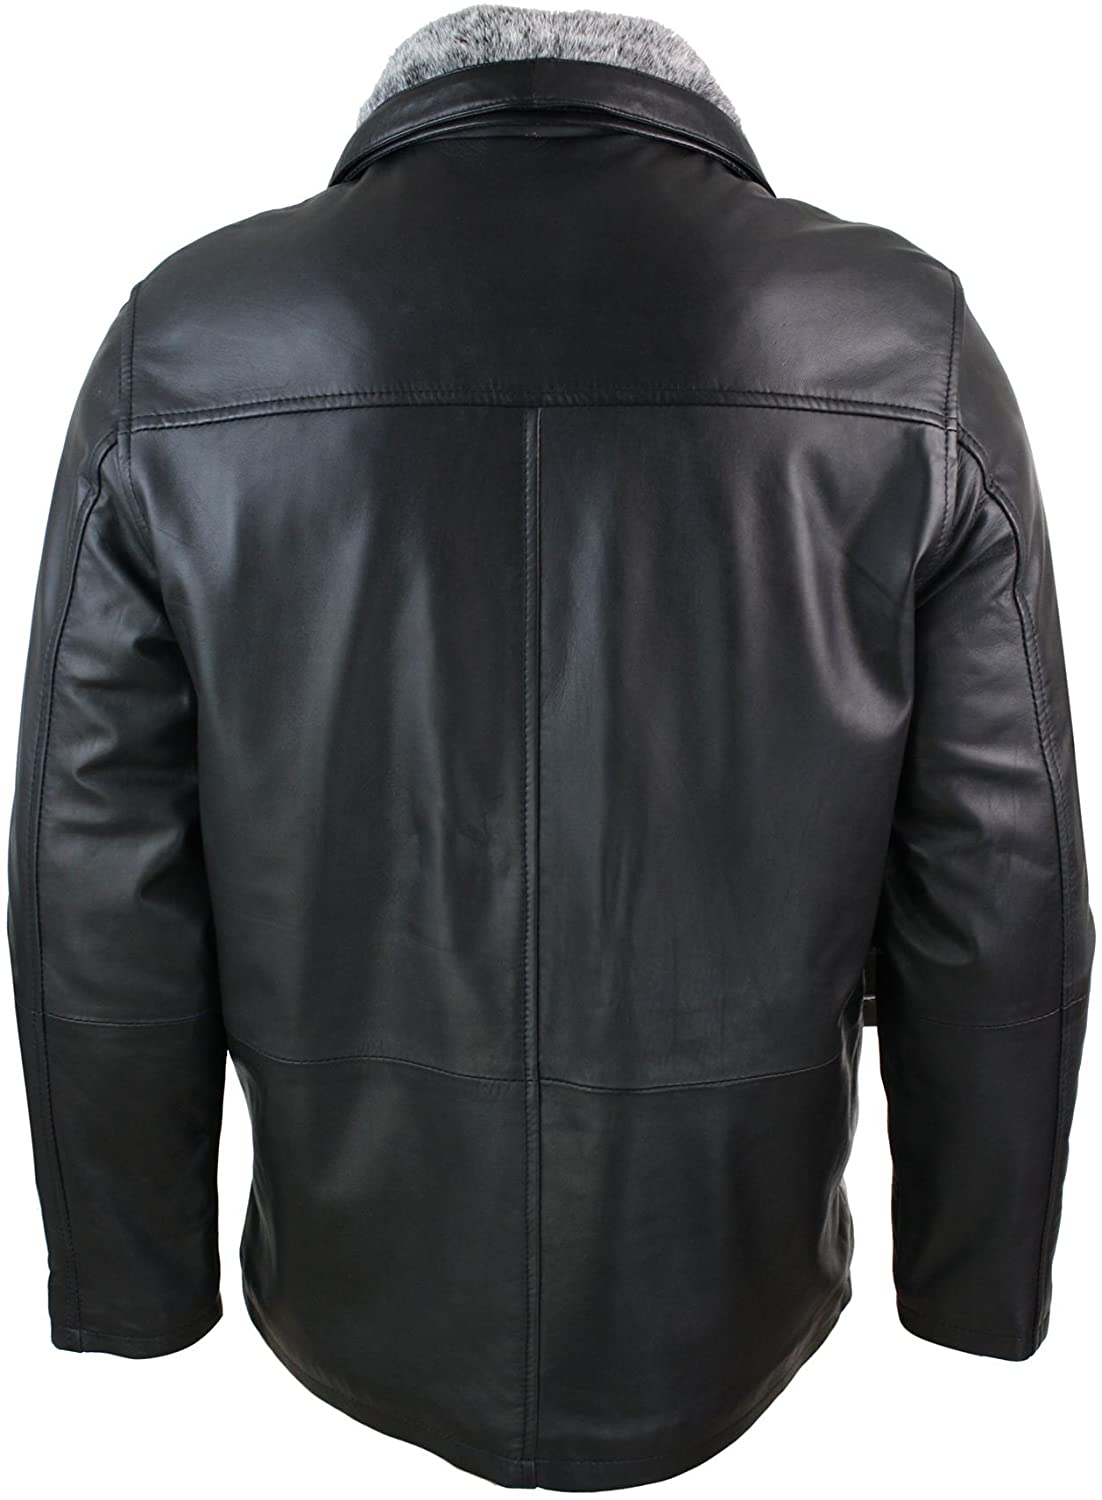 Men’s Classic Fur Leather Jacket in Black